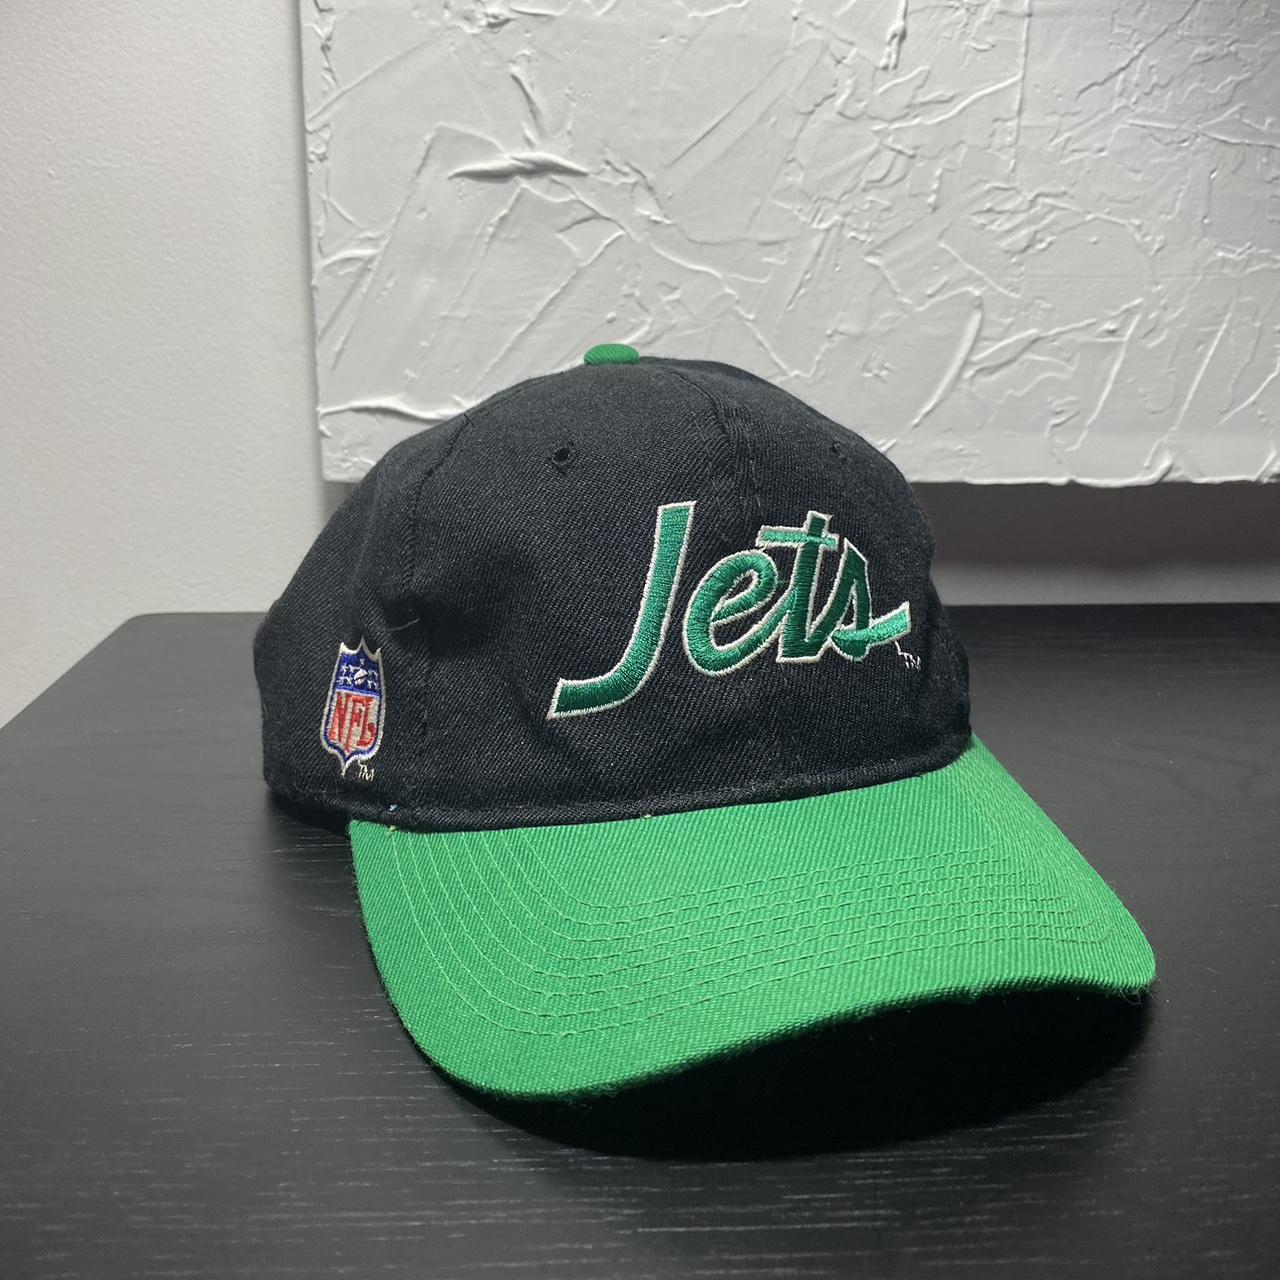 Vintage Sports Specialties New York Jets Doubleline - Depop